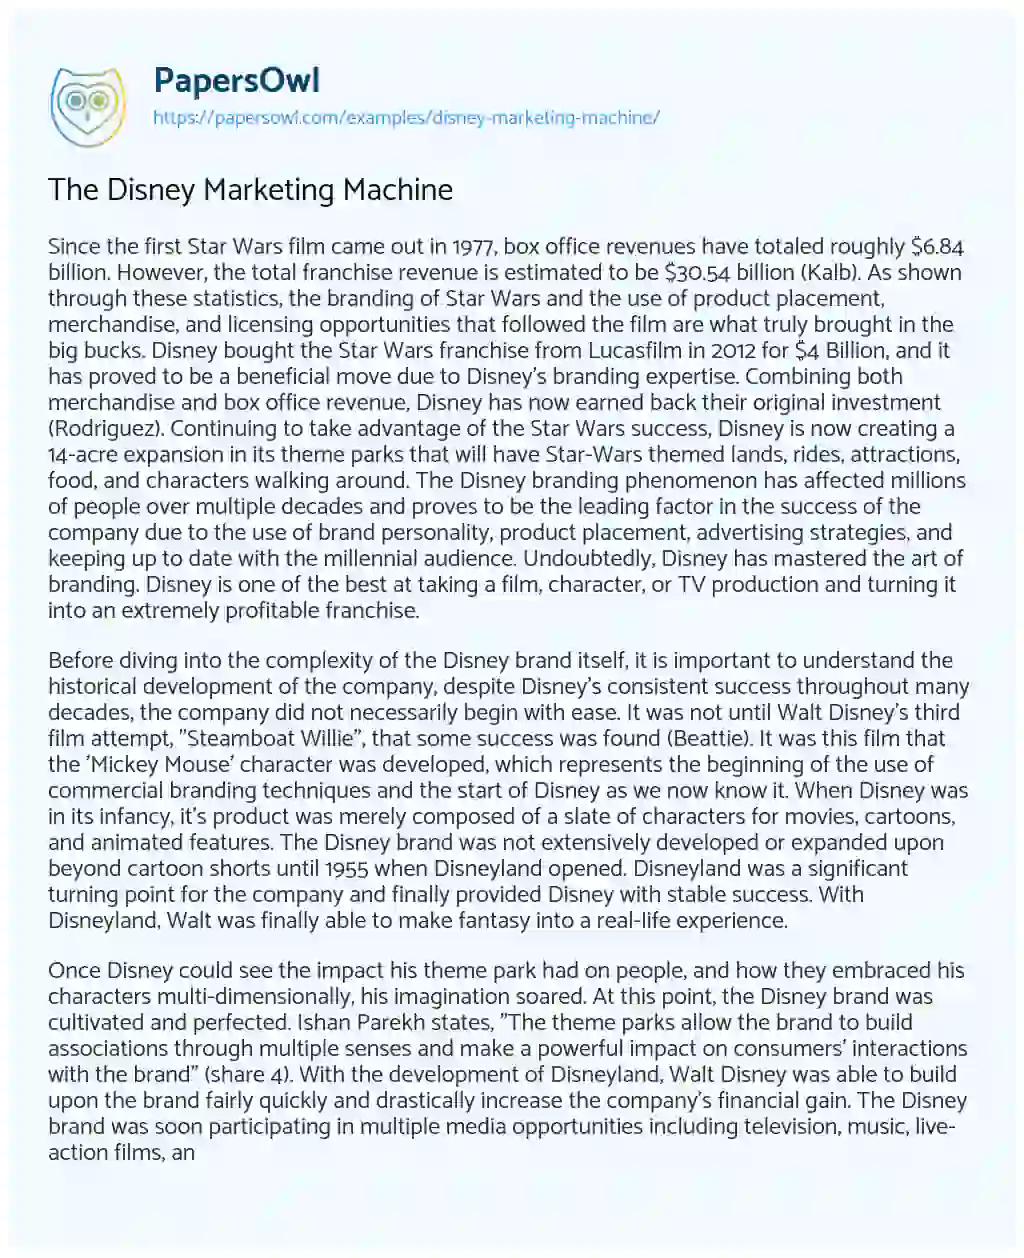 The Disney Marketing Machine essay